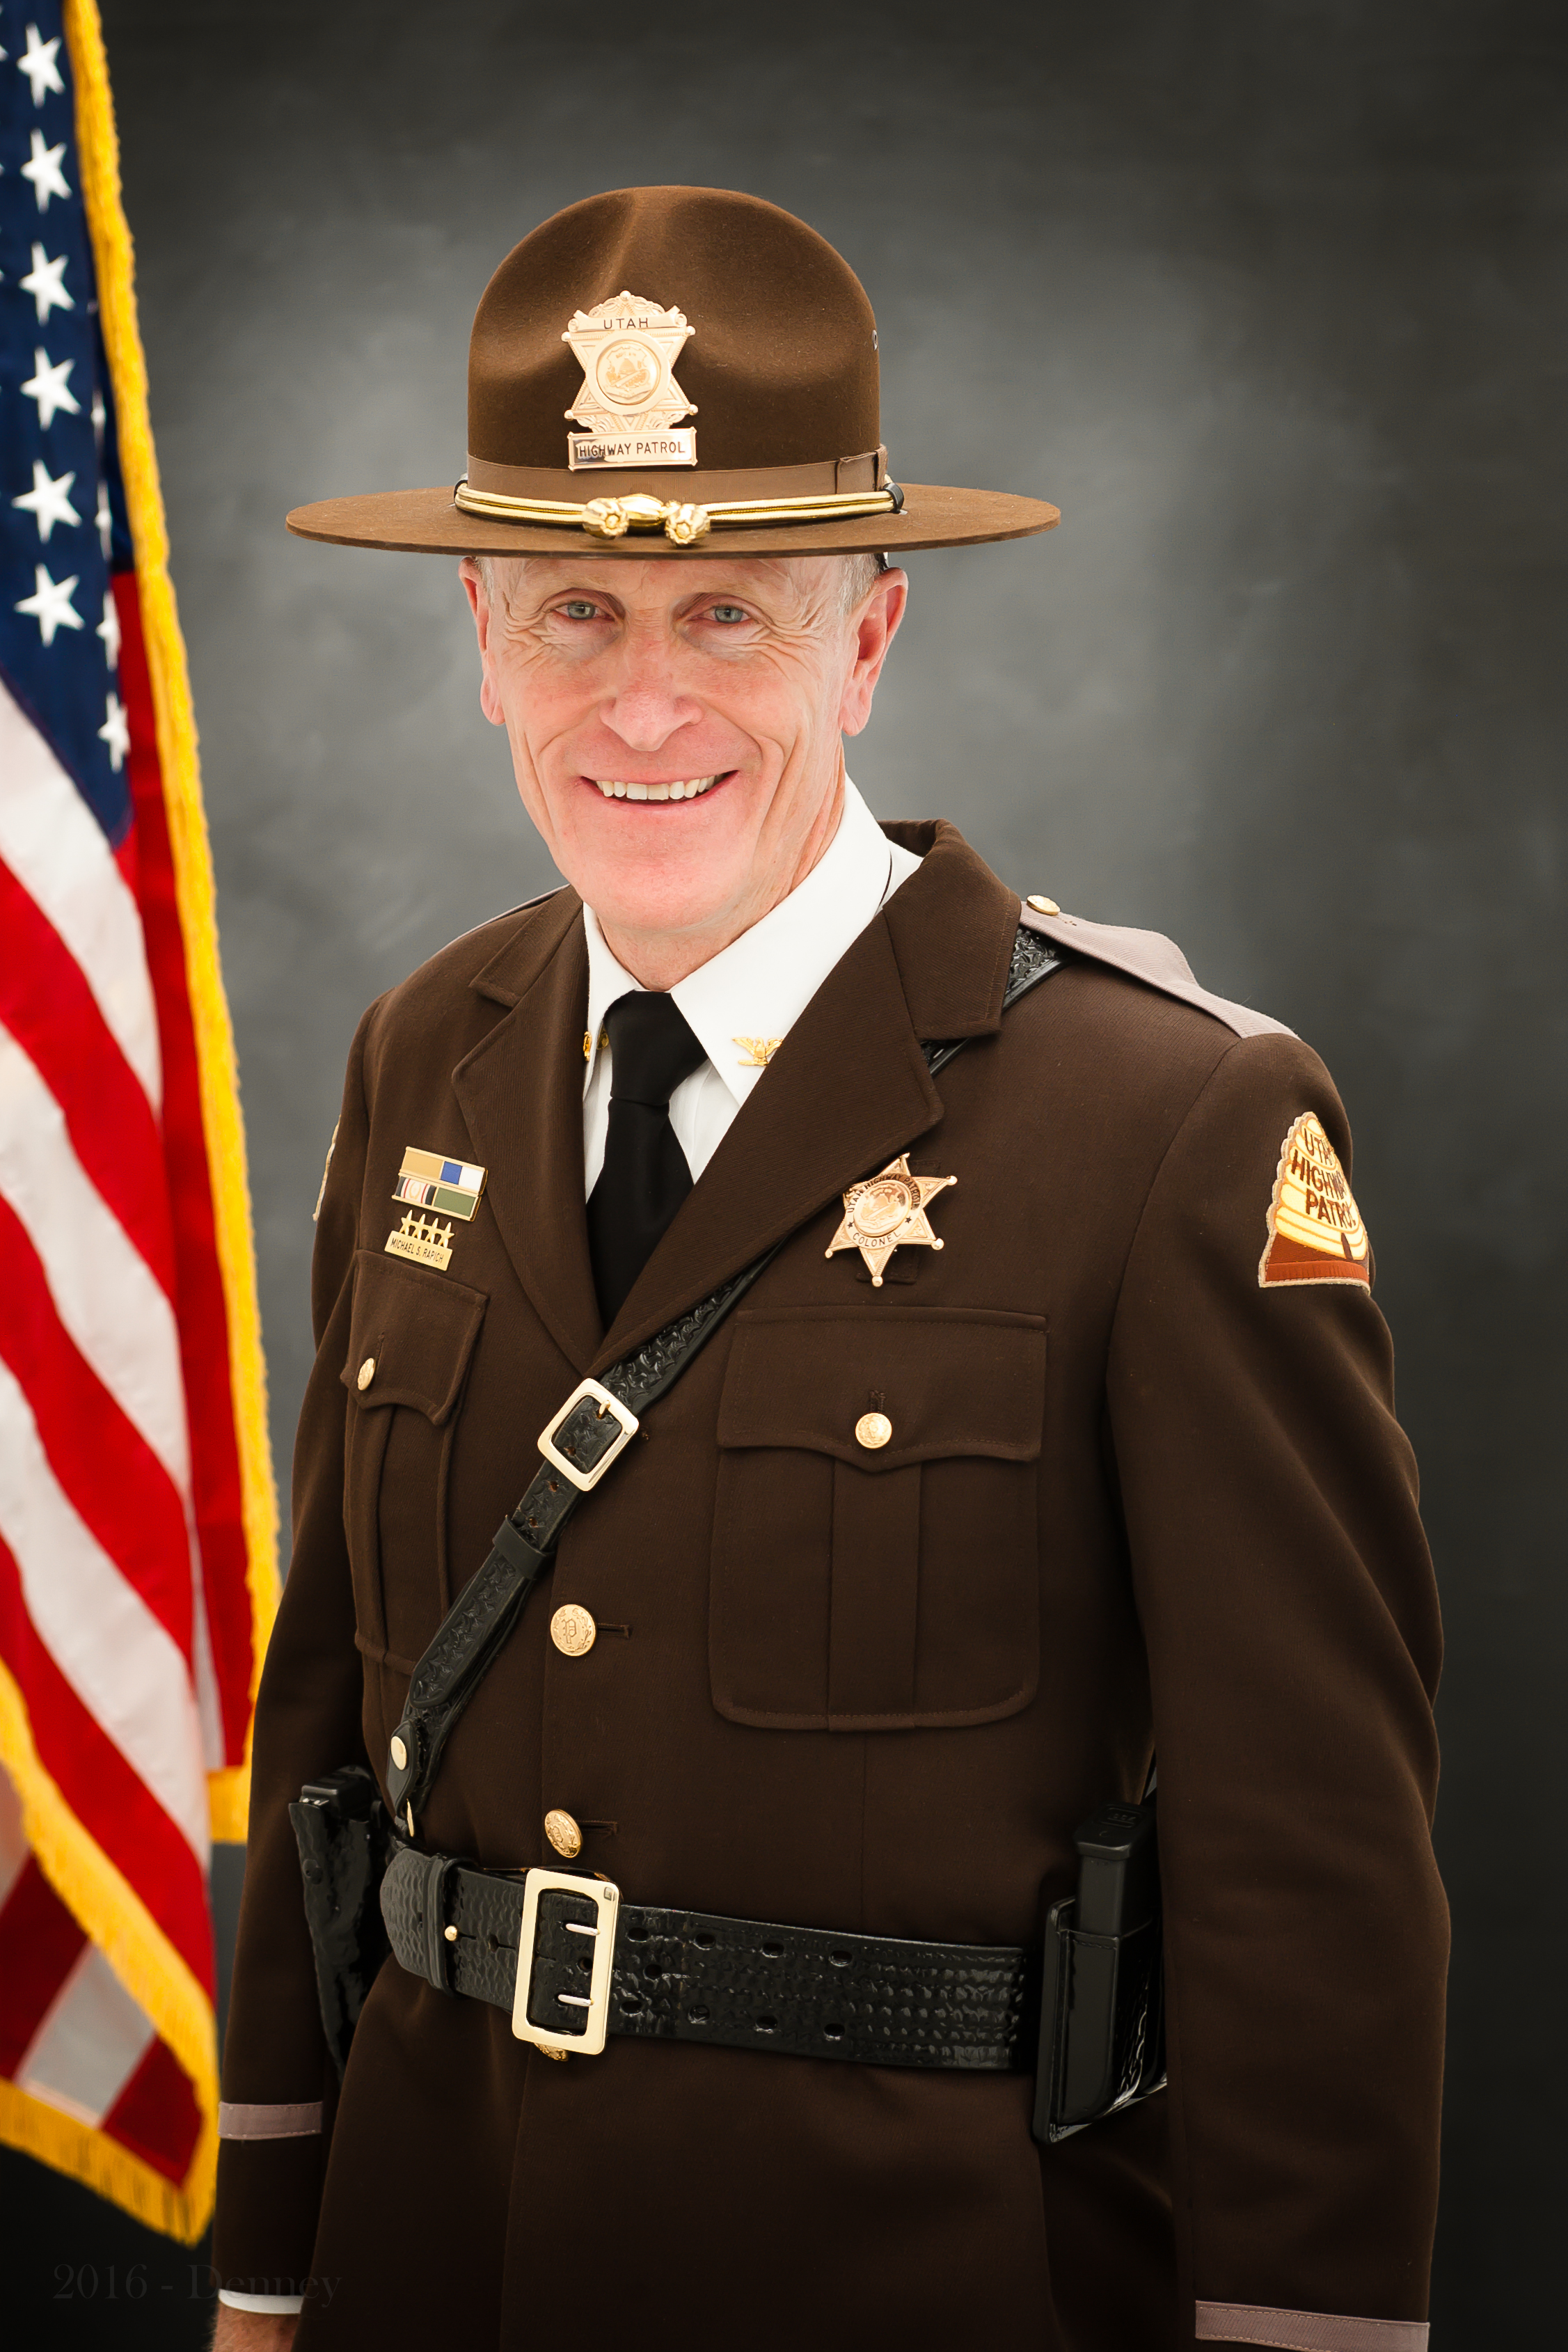 Utah Highway Patrol Colonel Michael Rapich